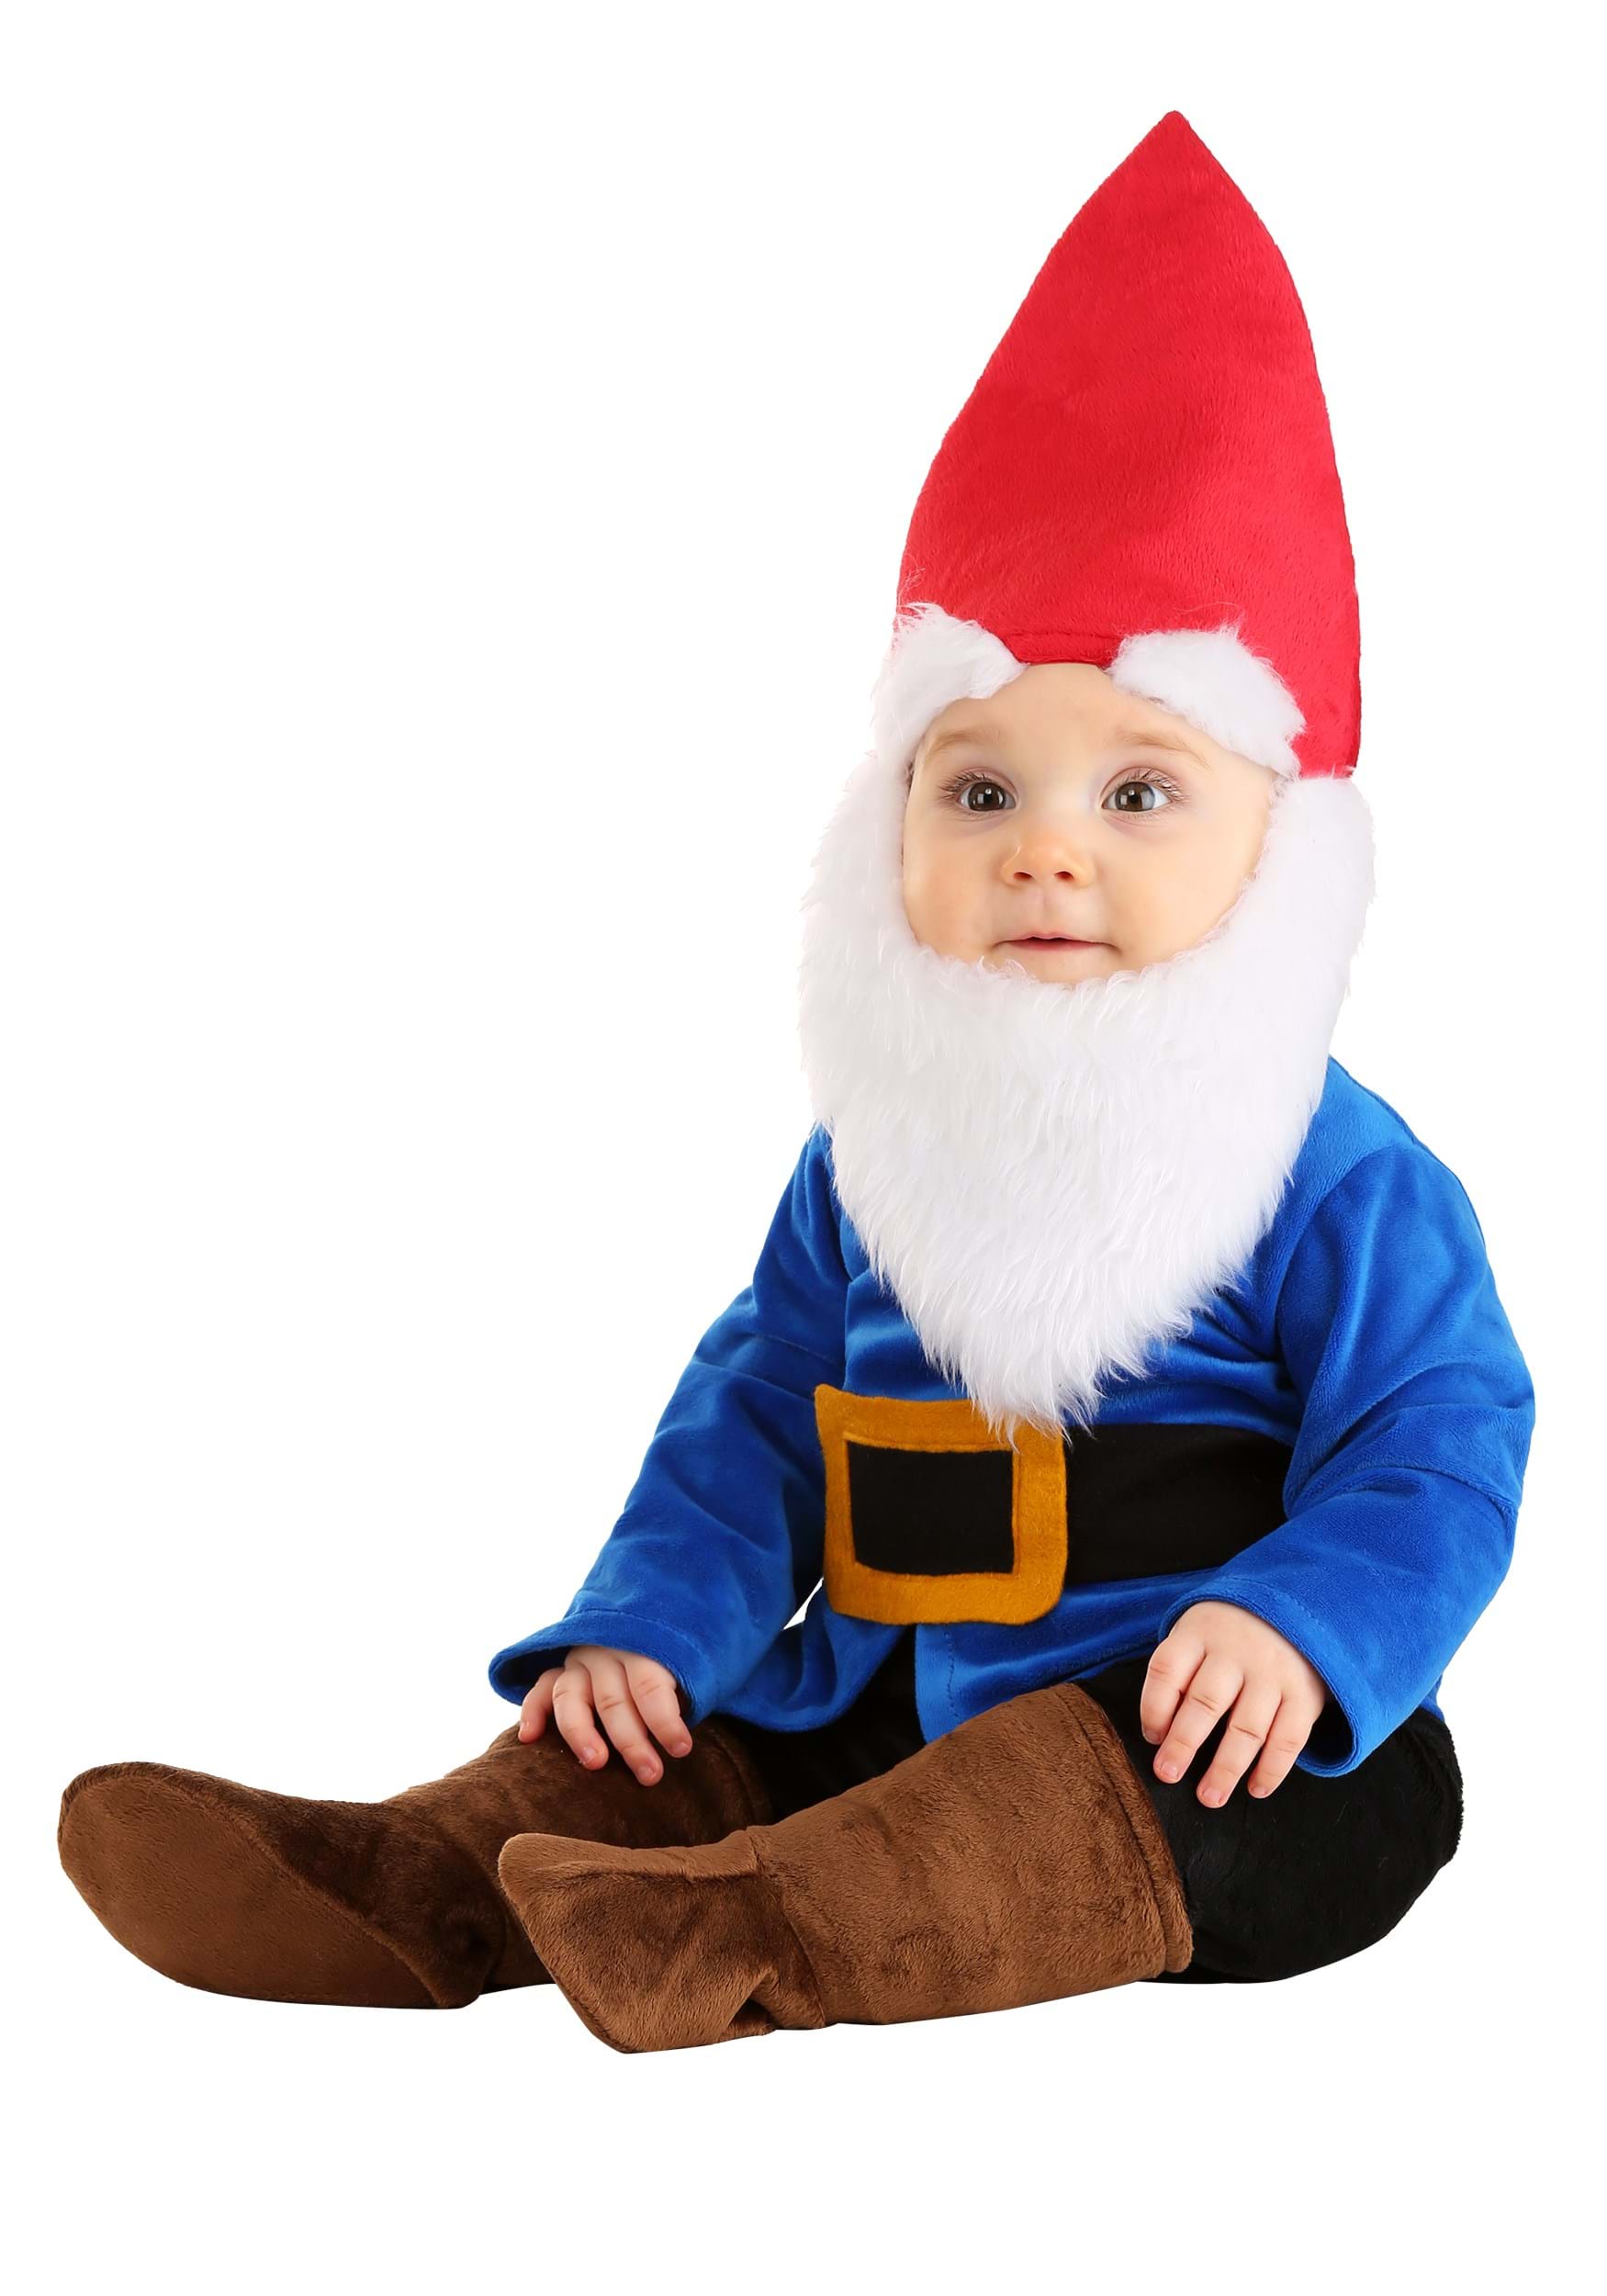 Infant Garden Gnome Costume